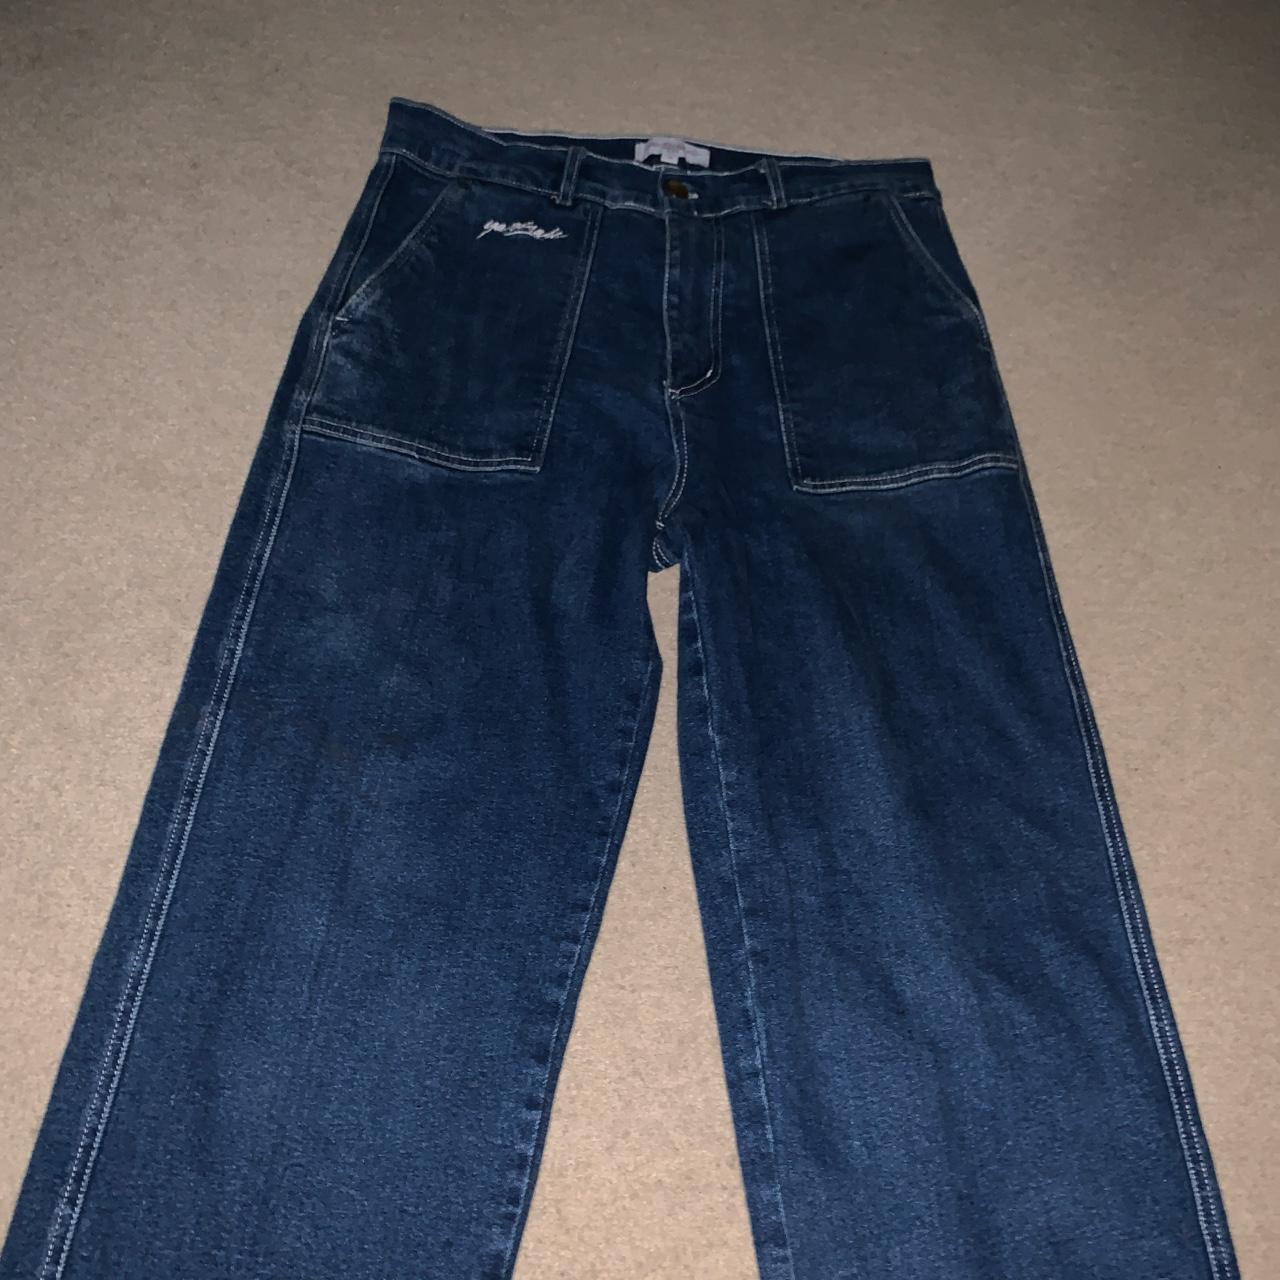 Blue Yardsale oddesey jeans Size s Waist 32 Free... - Depop